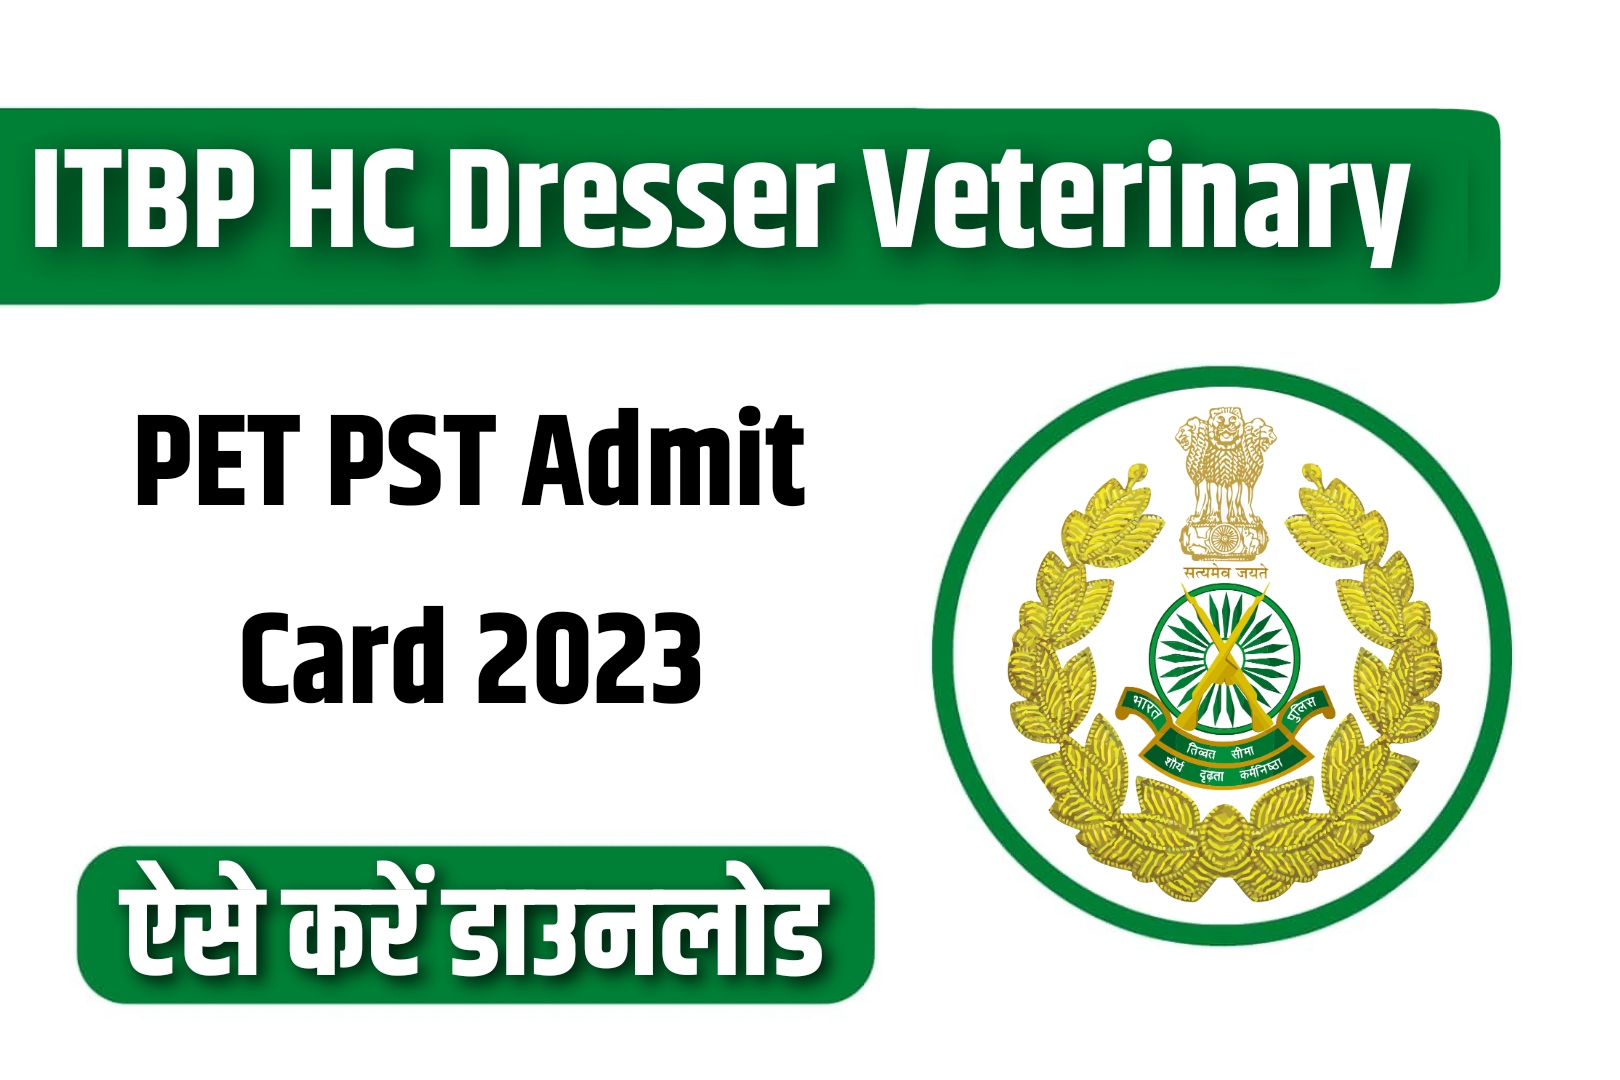 ITBP HC Dresser Veterinary PET PST Admit Card 2023 | आईटीबीपी ड्रेसर वेटरनरी एडमिट कार्ड